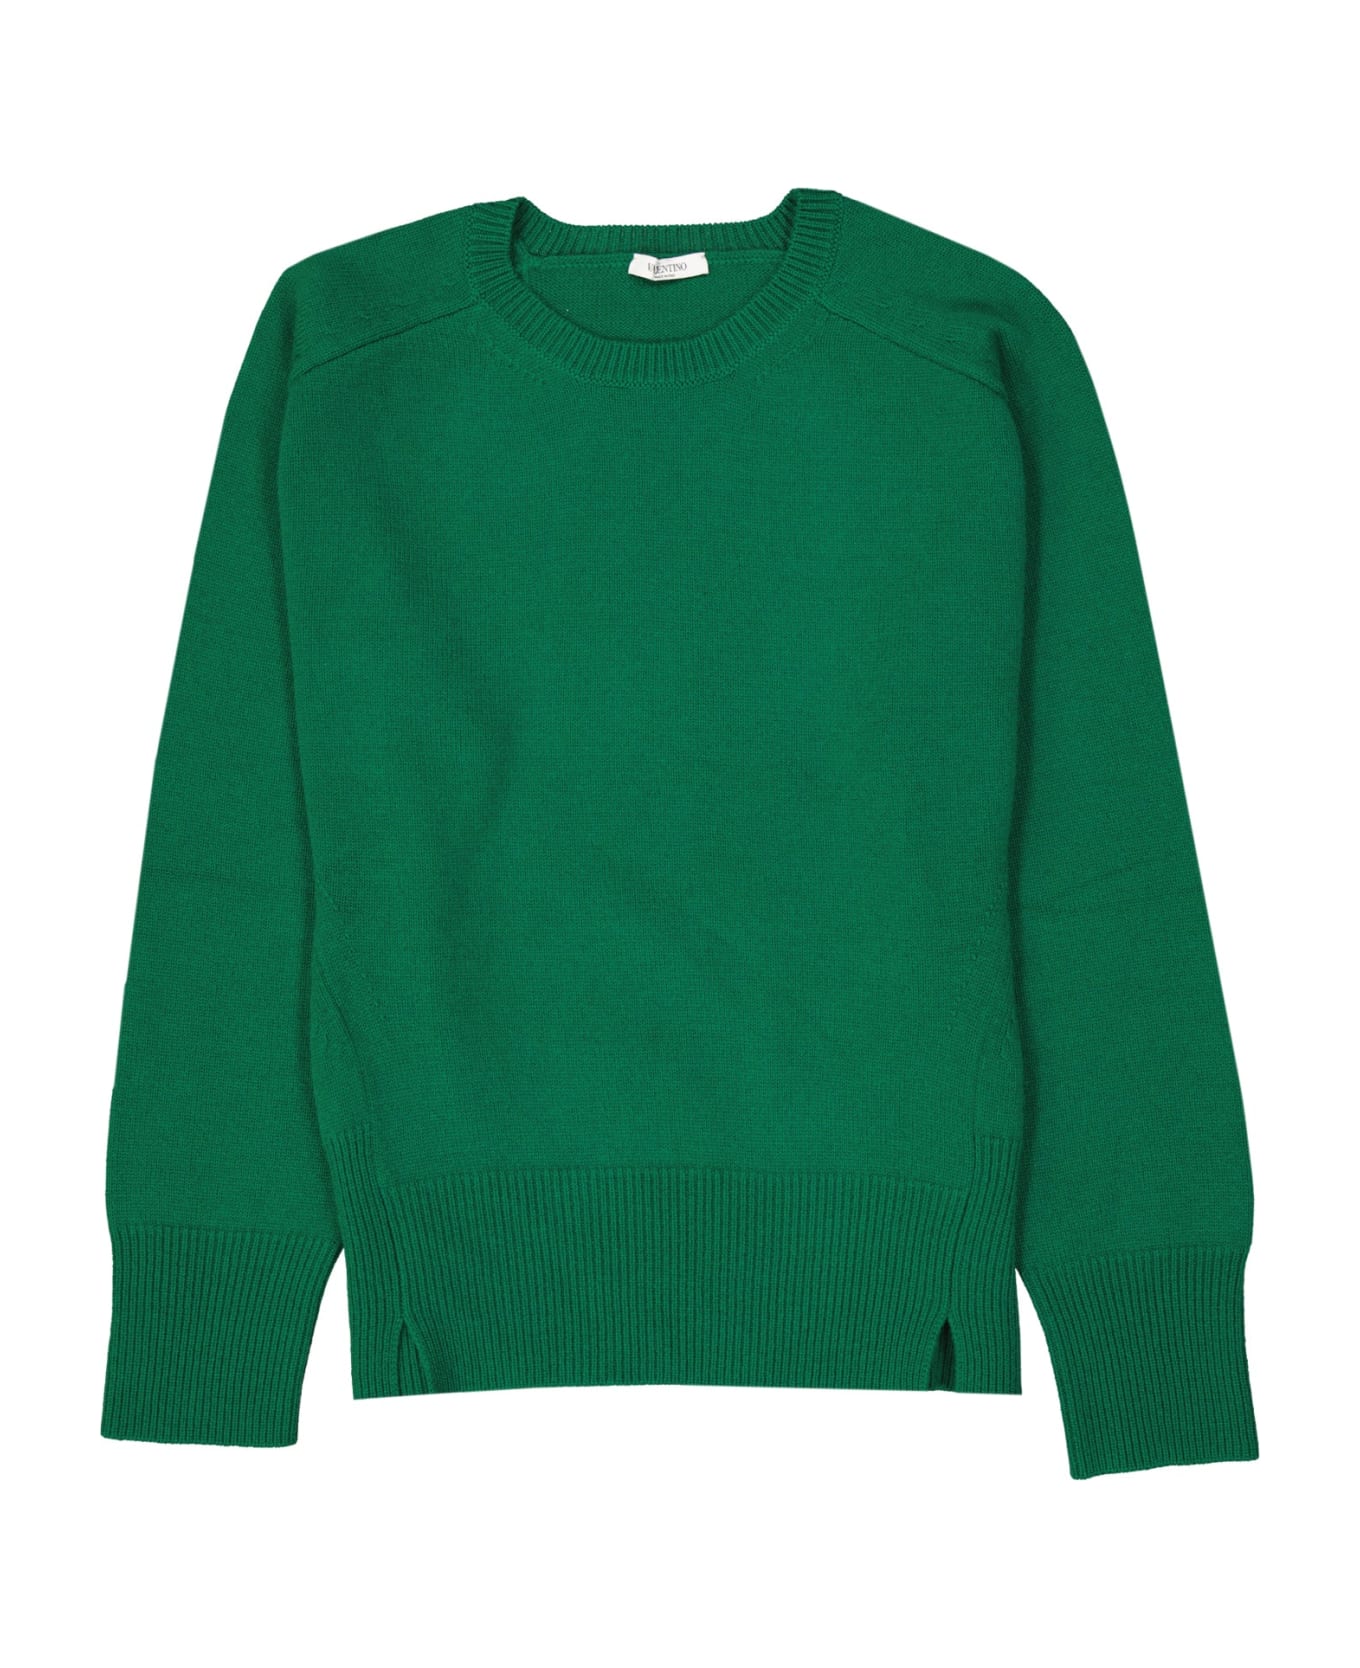 Valentino Cashmere Sweater - Green